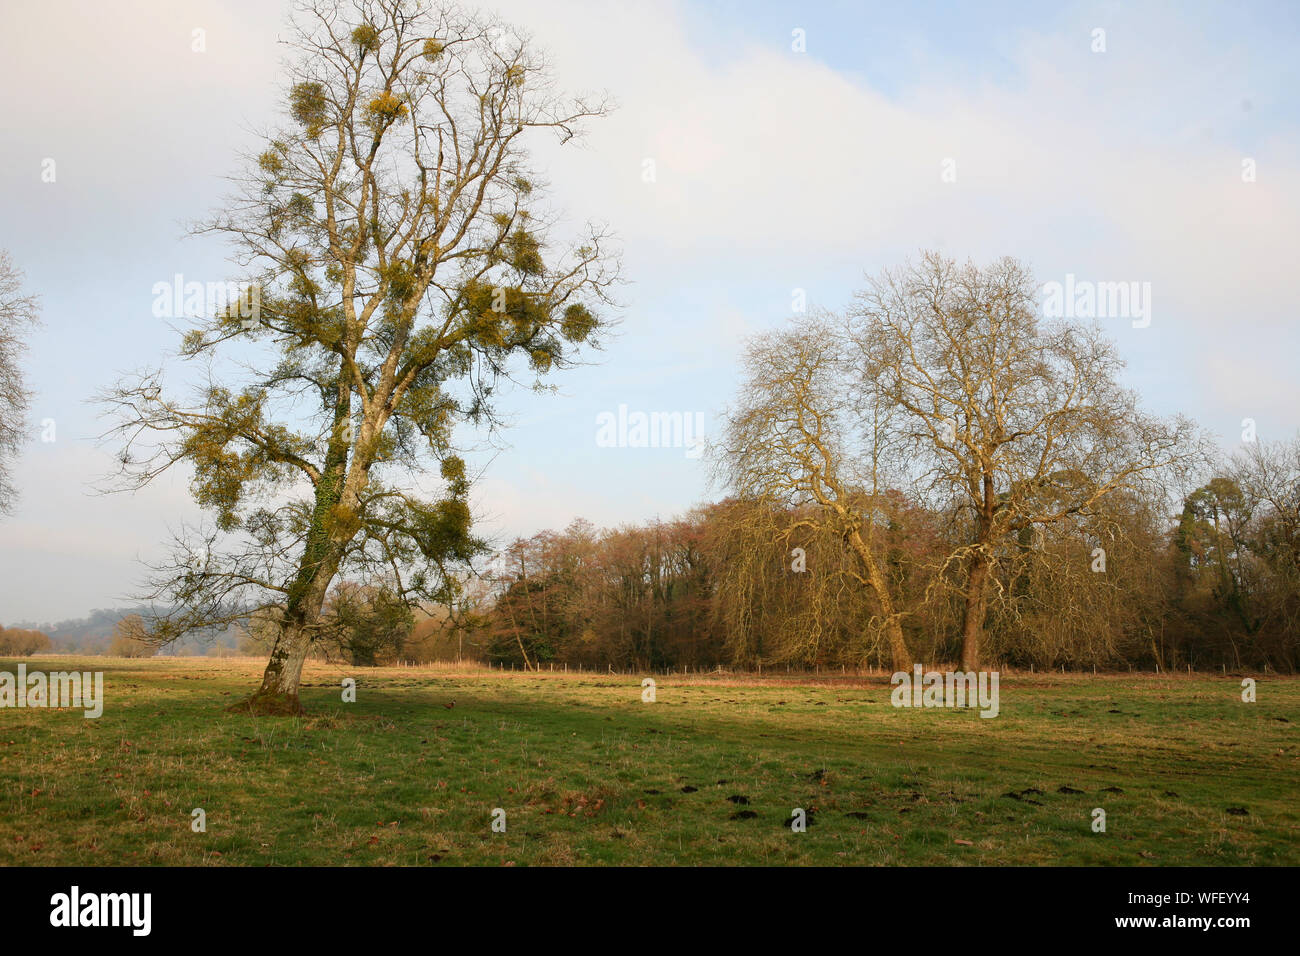 Winter tree covered in Mistletoe, Mottisfont Abbey Gardens, Romsey, Hampshire, UK Stock Photo